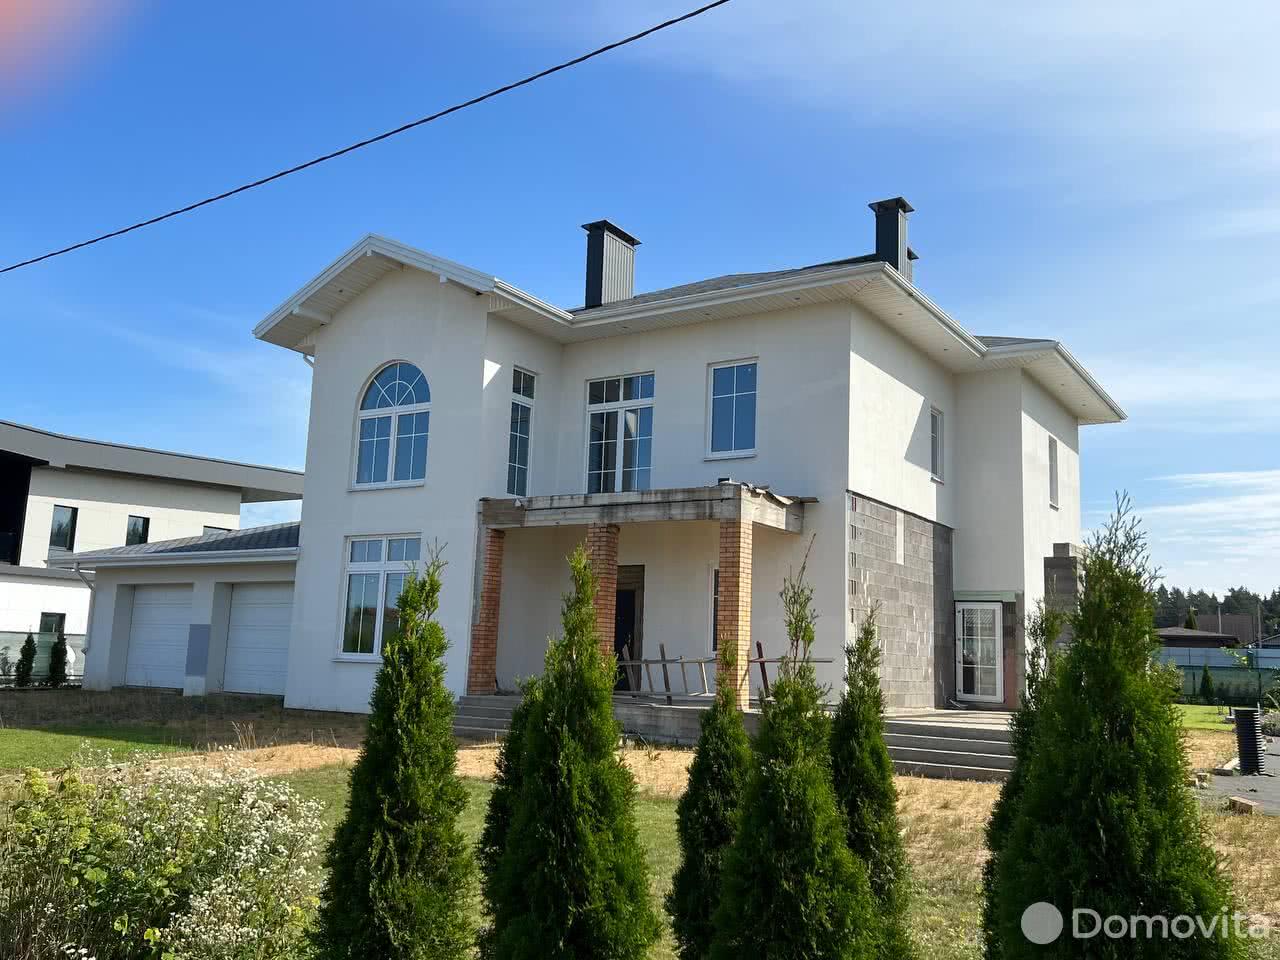 дом, Дроздово, ул. Рублевая, стоимость продажи 868 483 р.